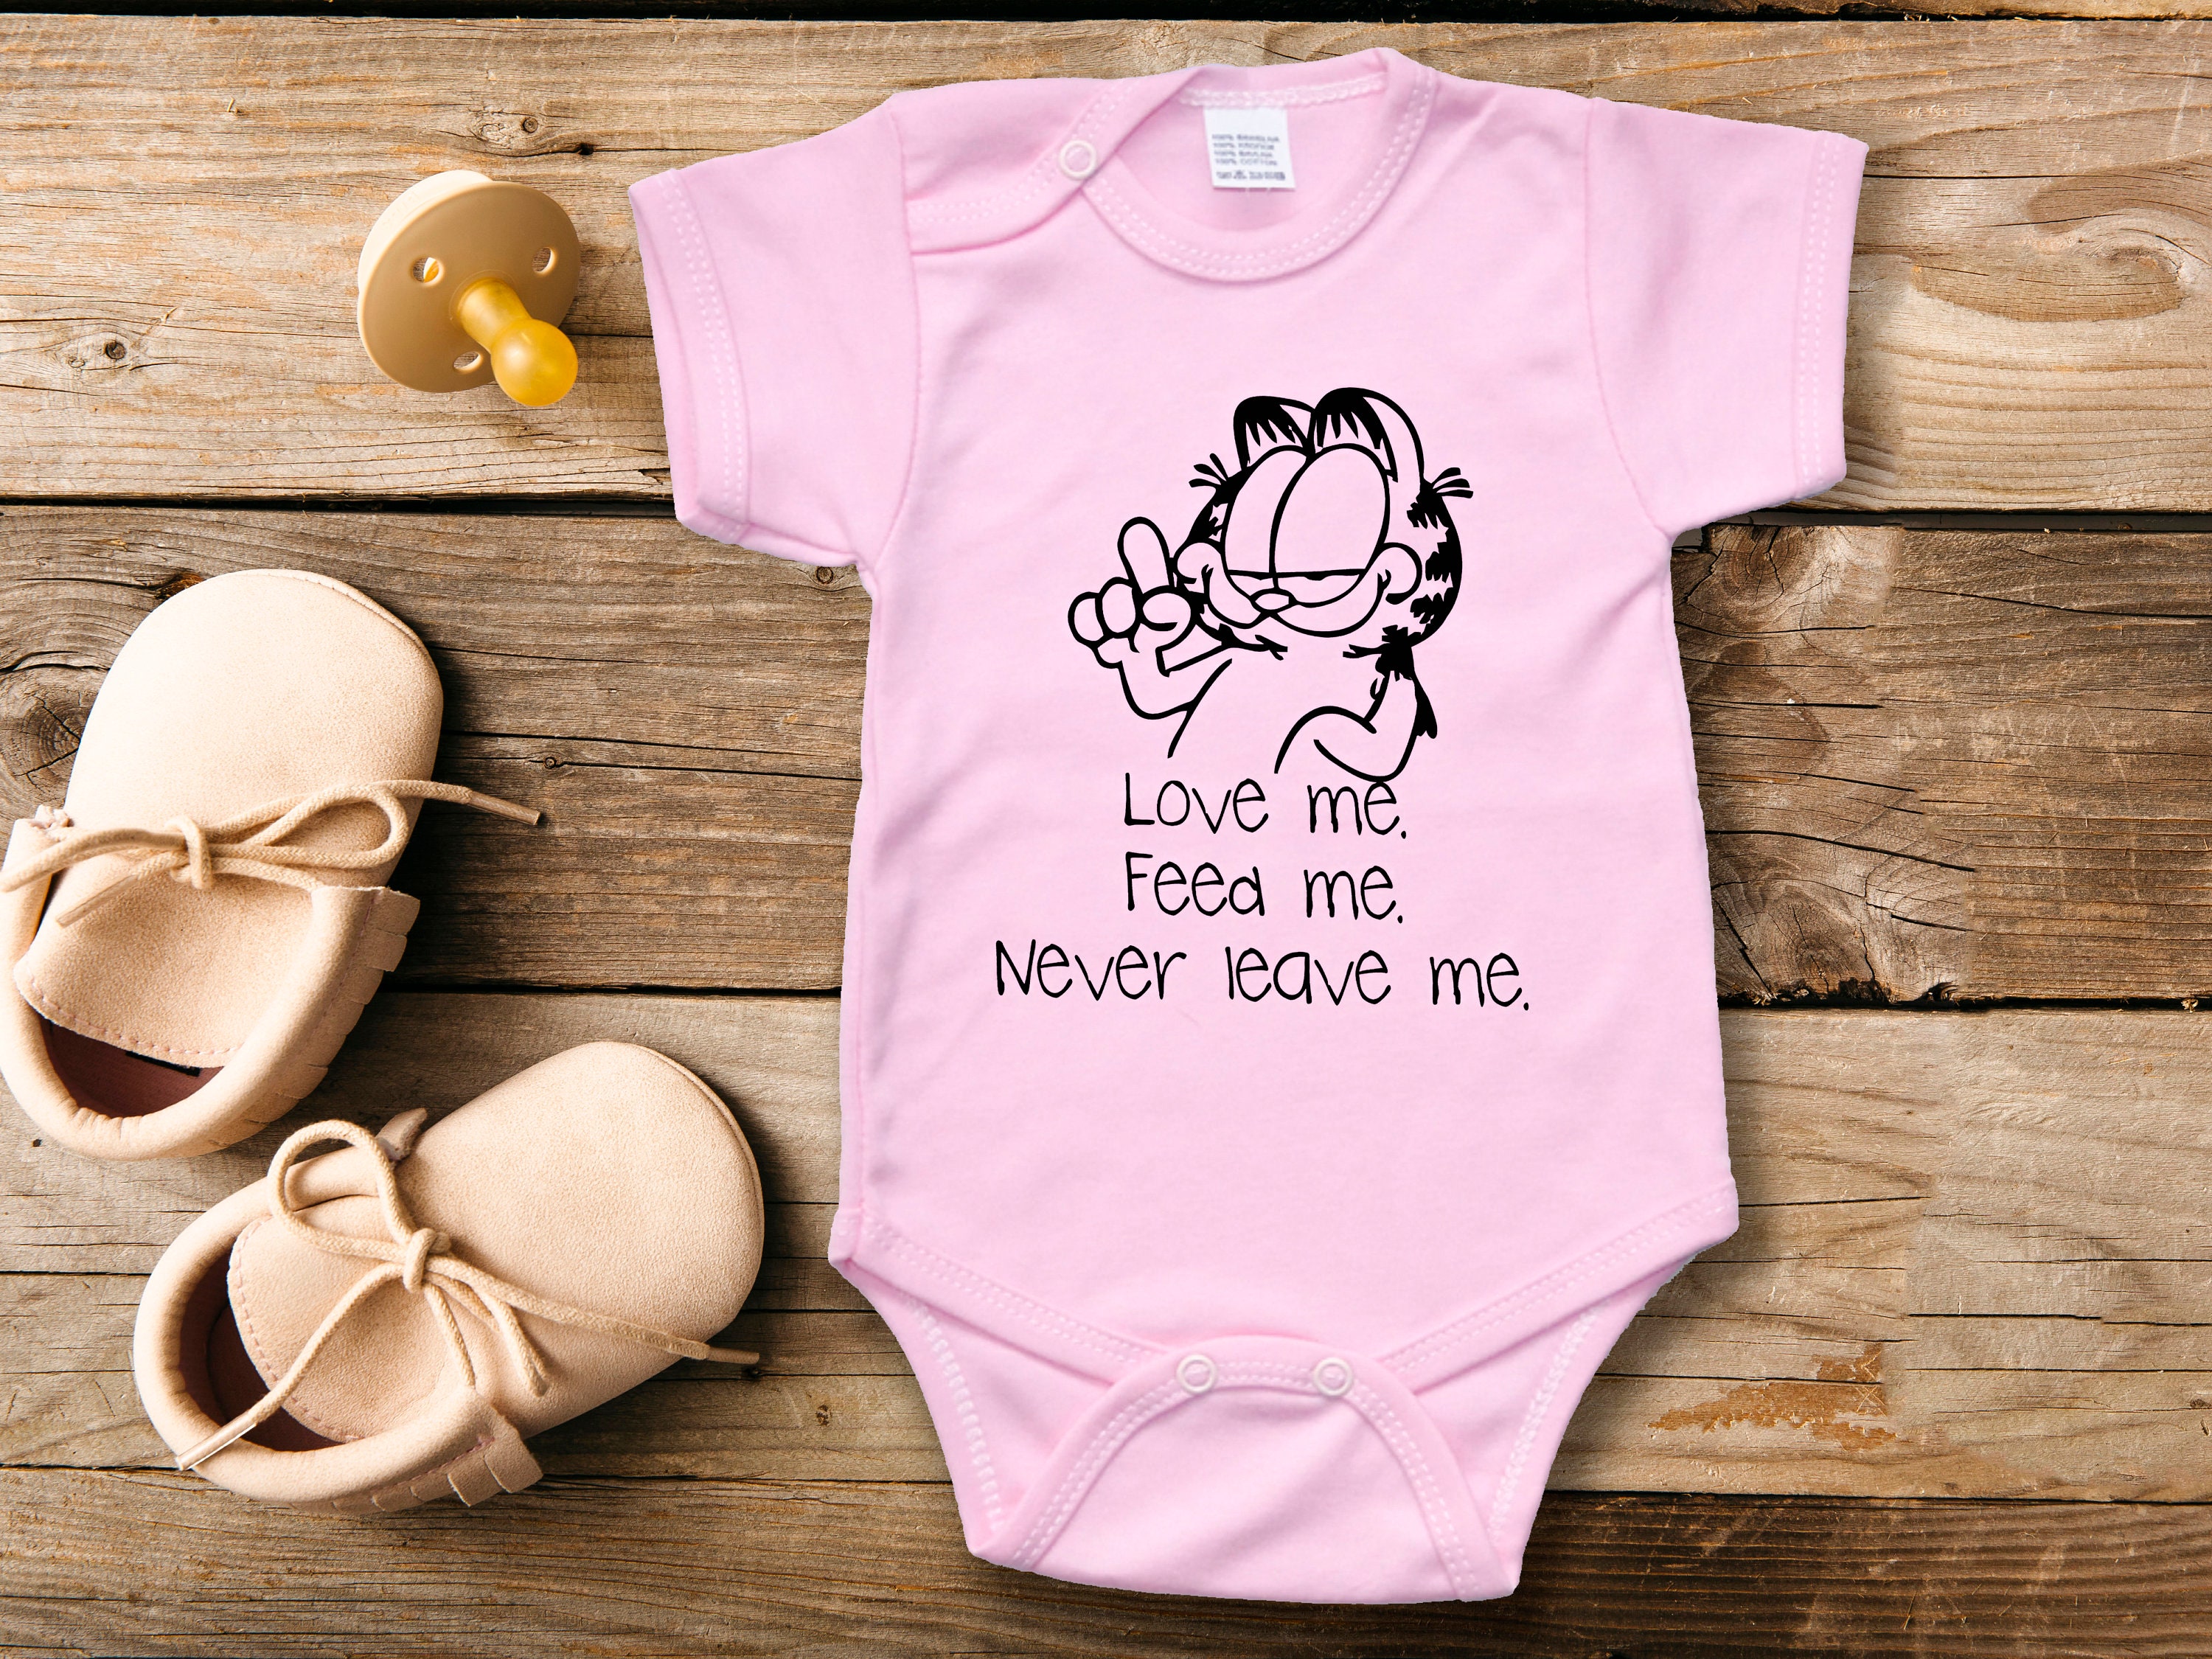 Baby Girls Pink Leopard Print Novelty Romper 0-3 3-6 6-9 Months Free UK P&P